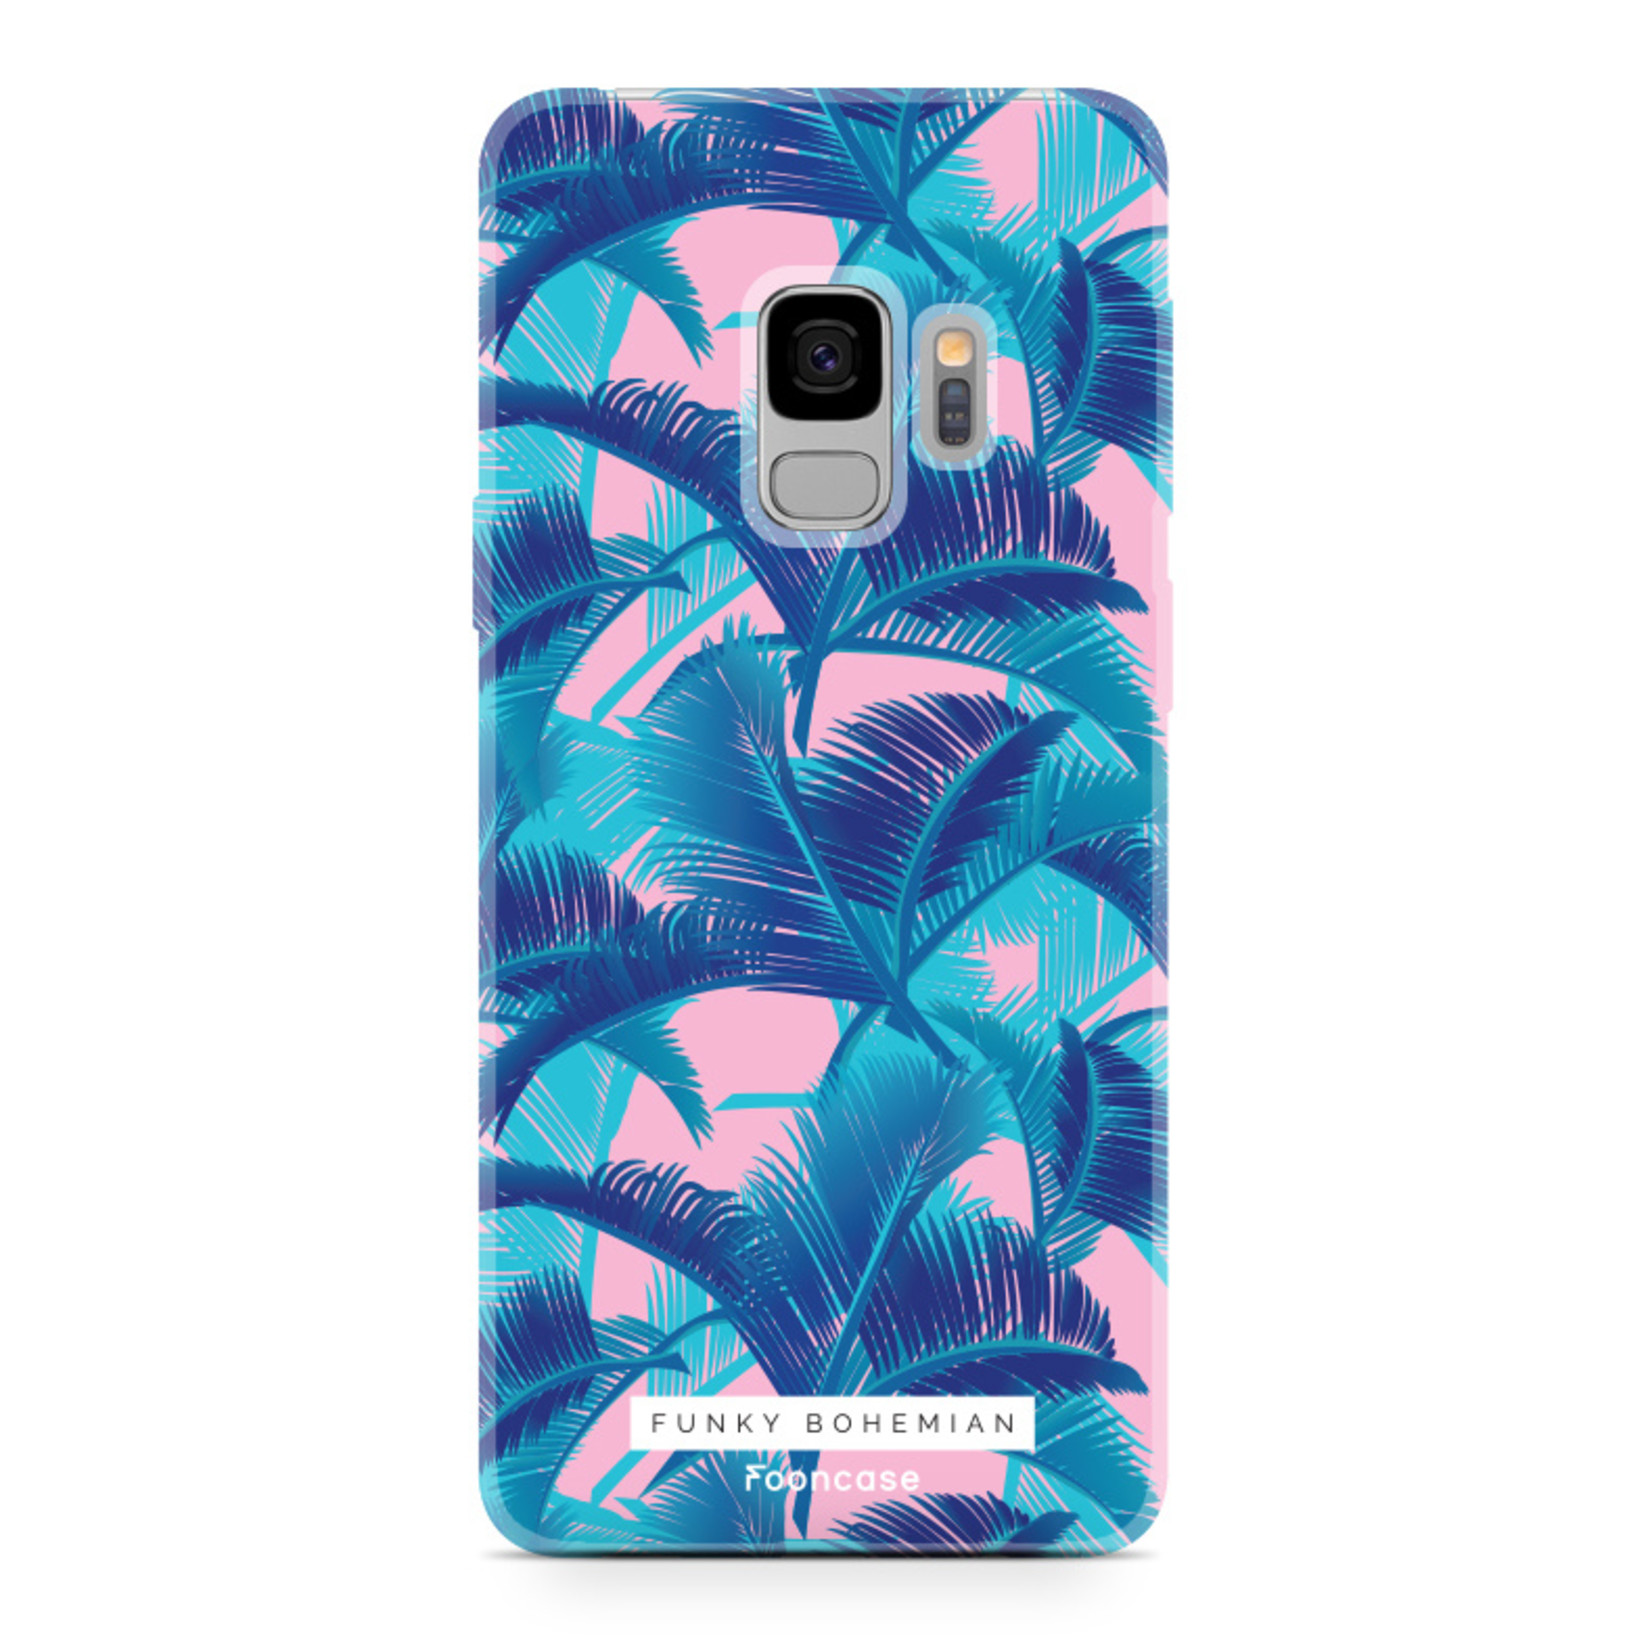 FOONCASE Samsung Galaxy S9 hoesje TPU Soft Case - Back Cover - Funky Bohemian / Blauw Roze Bladeren